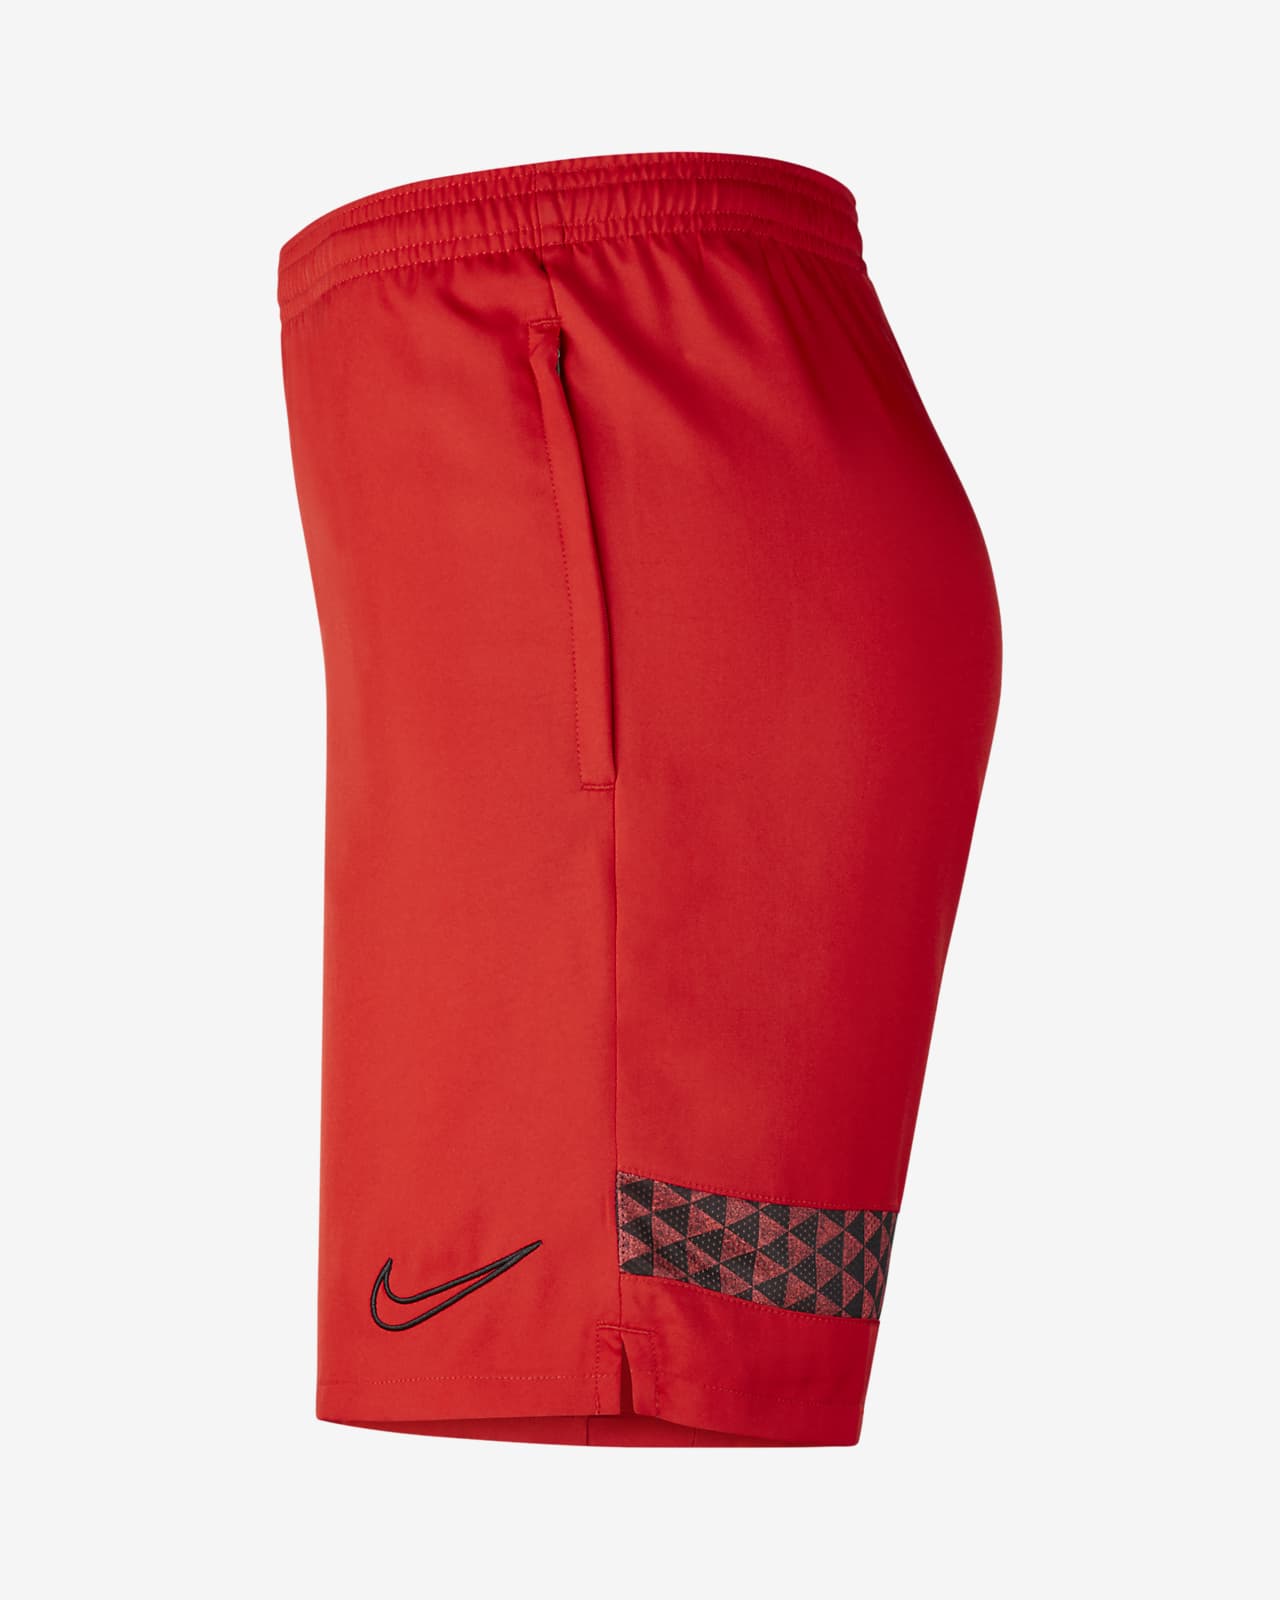 nike men's woven shorts red